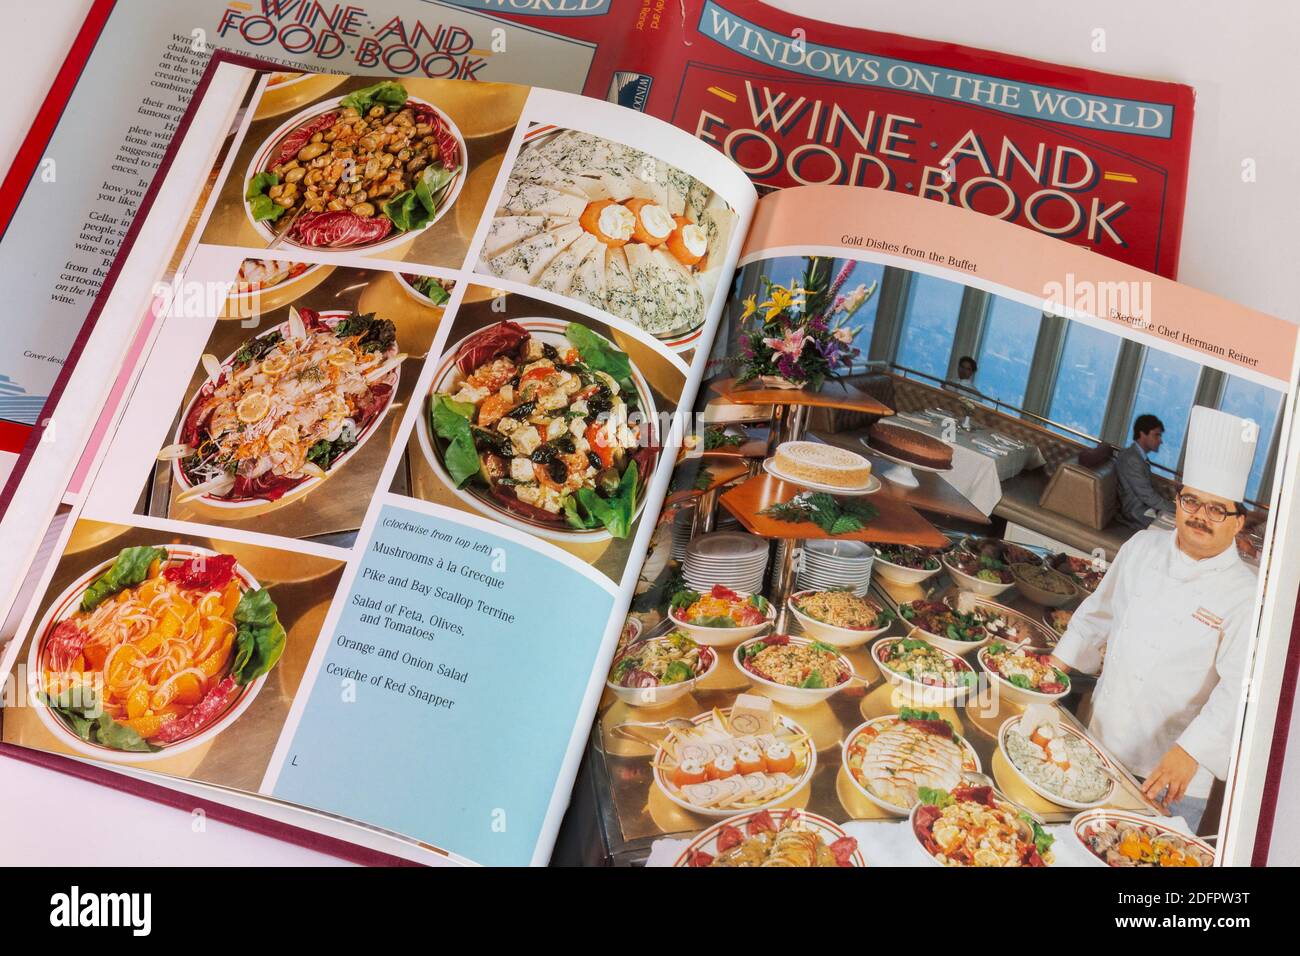 Vintage 1986 Windows on the World Wine and Food Book, NYC, USA Stock Photo